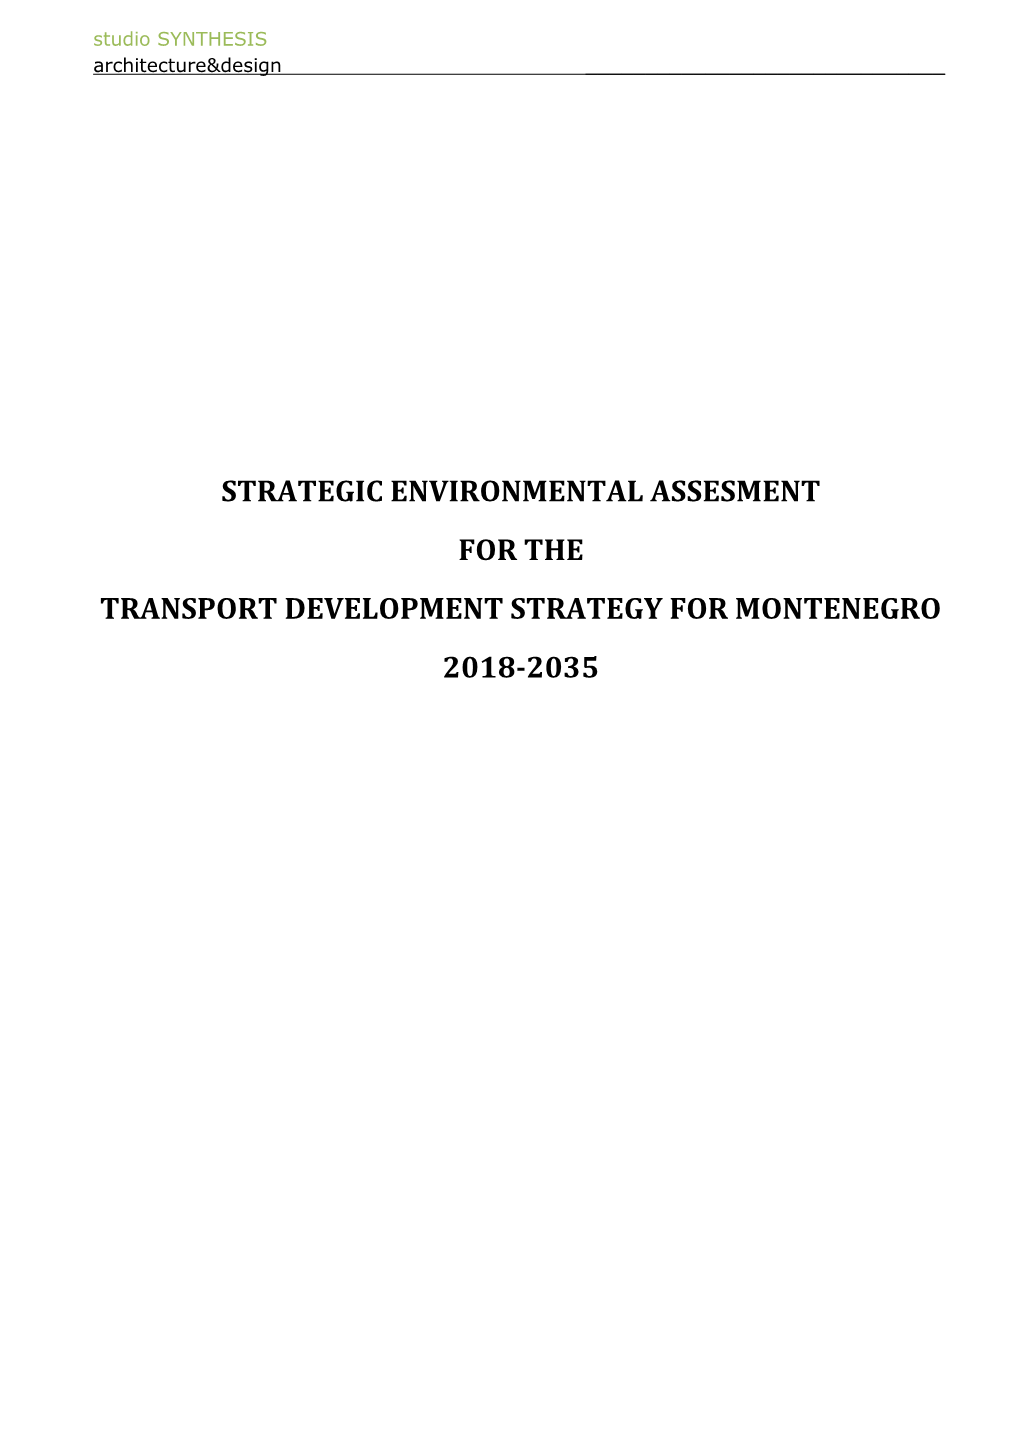 Strategic Environmental Assesment for the Transport Development Strategy for Montenegro 2018-2035